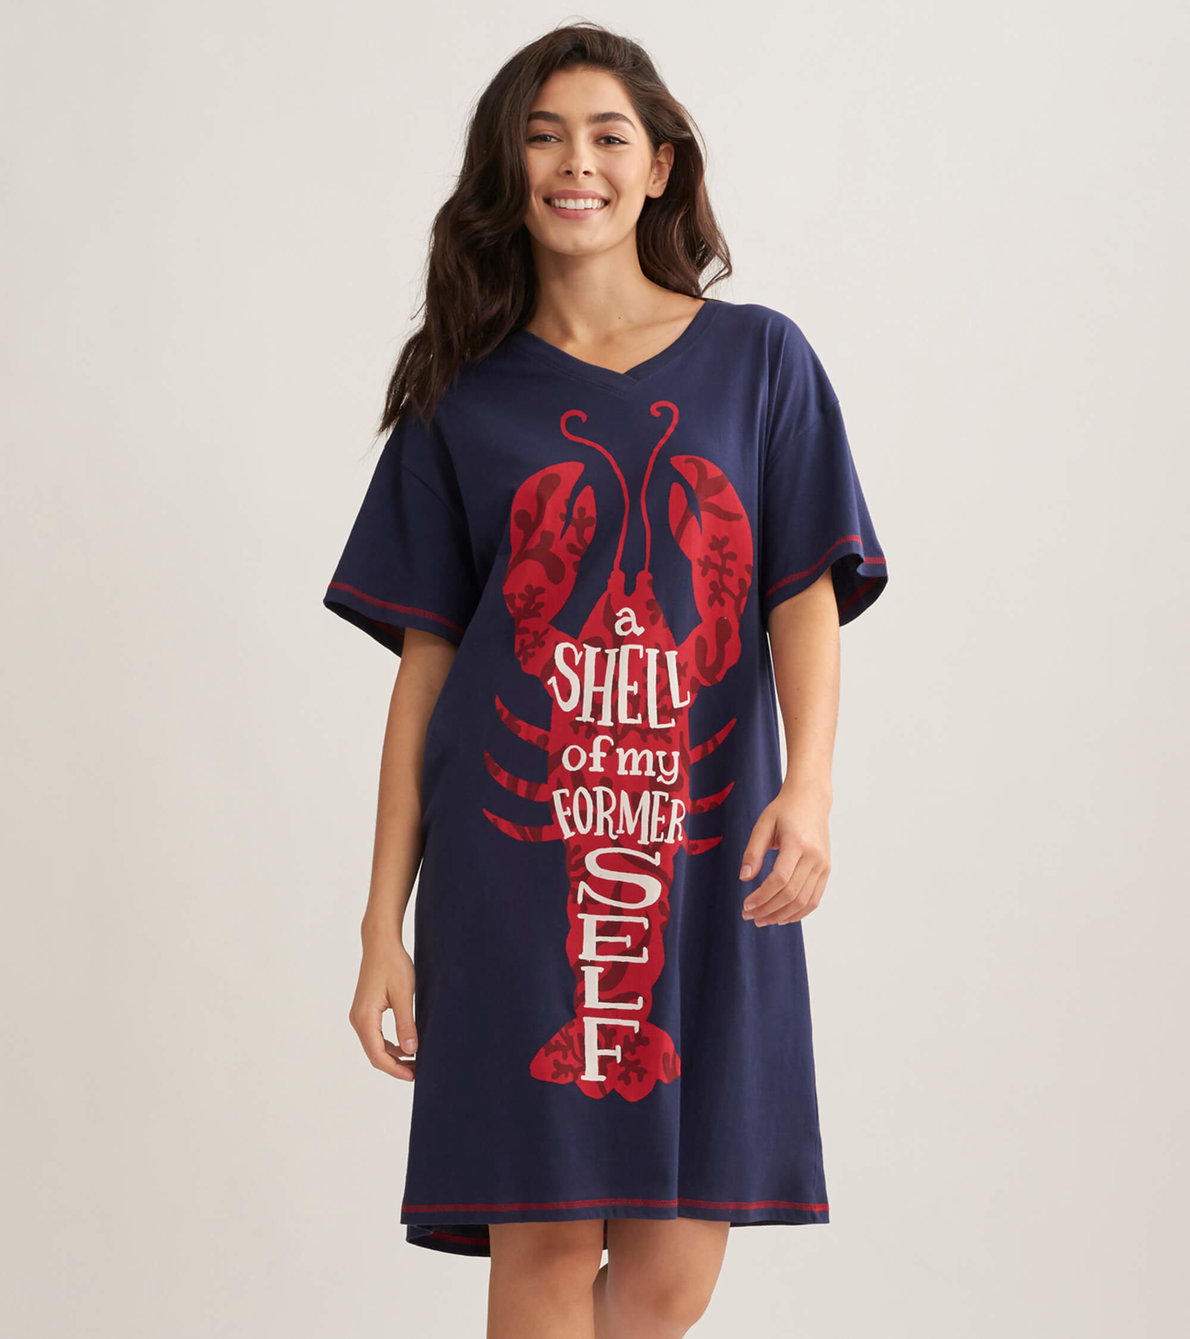 View larger image of Shell Former Self Women's Sleepshirt